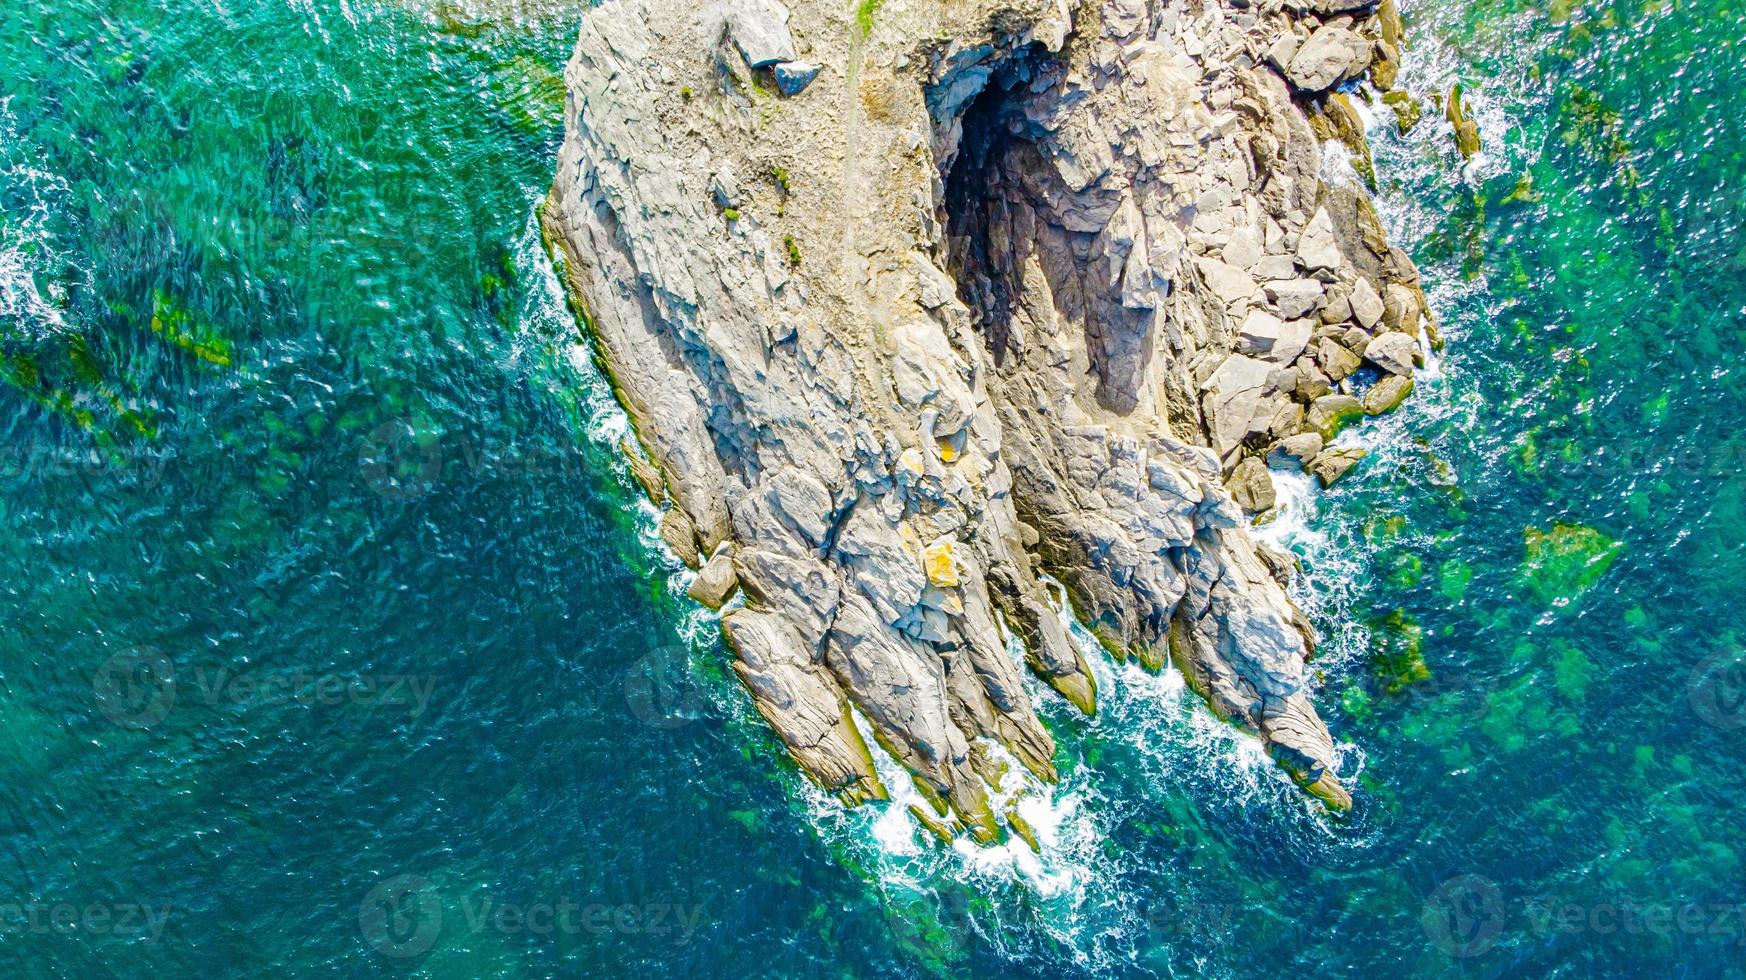 Meat Cove Rock with Splashing Water, Cape Breton, Nova Scotia photo